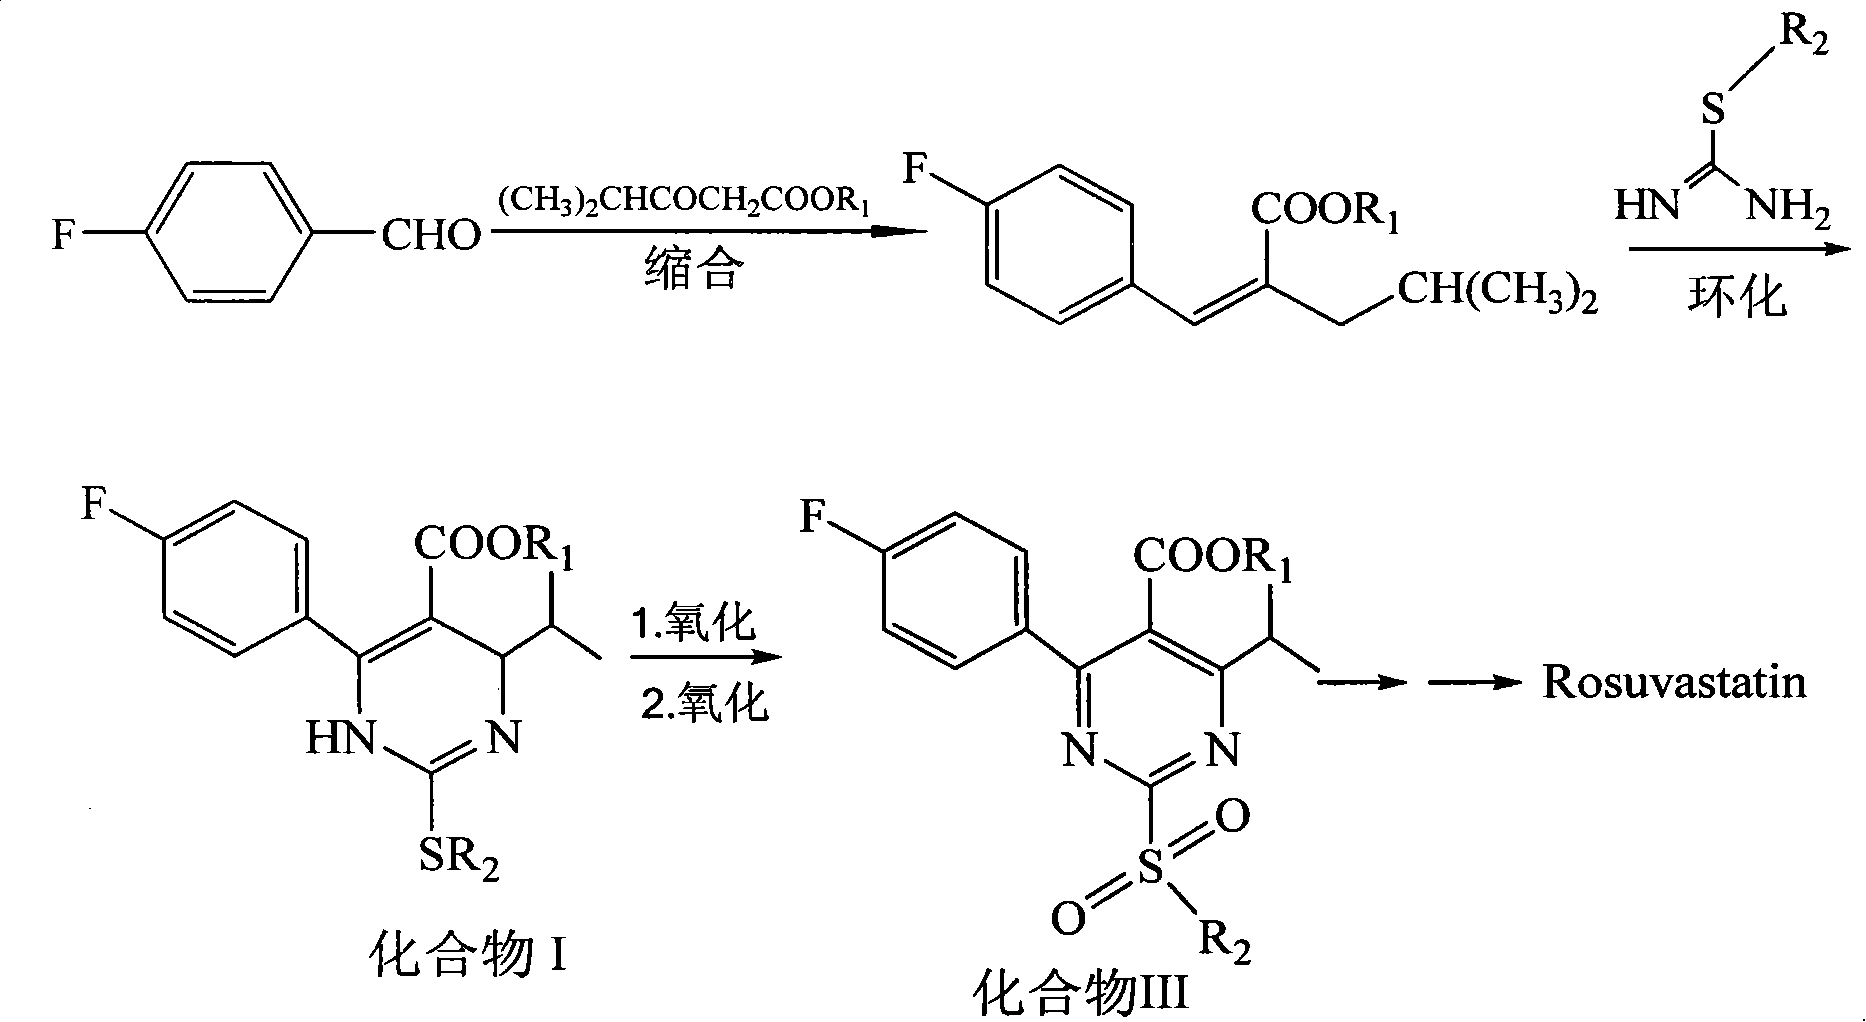 Method for synthesizing key intermediate of rosuvastain calcium